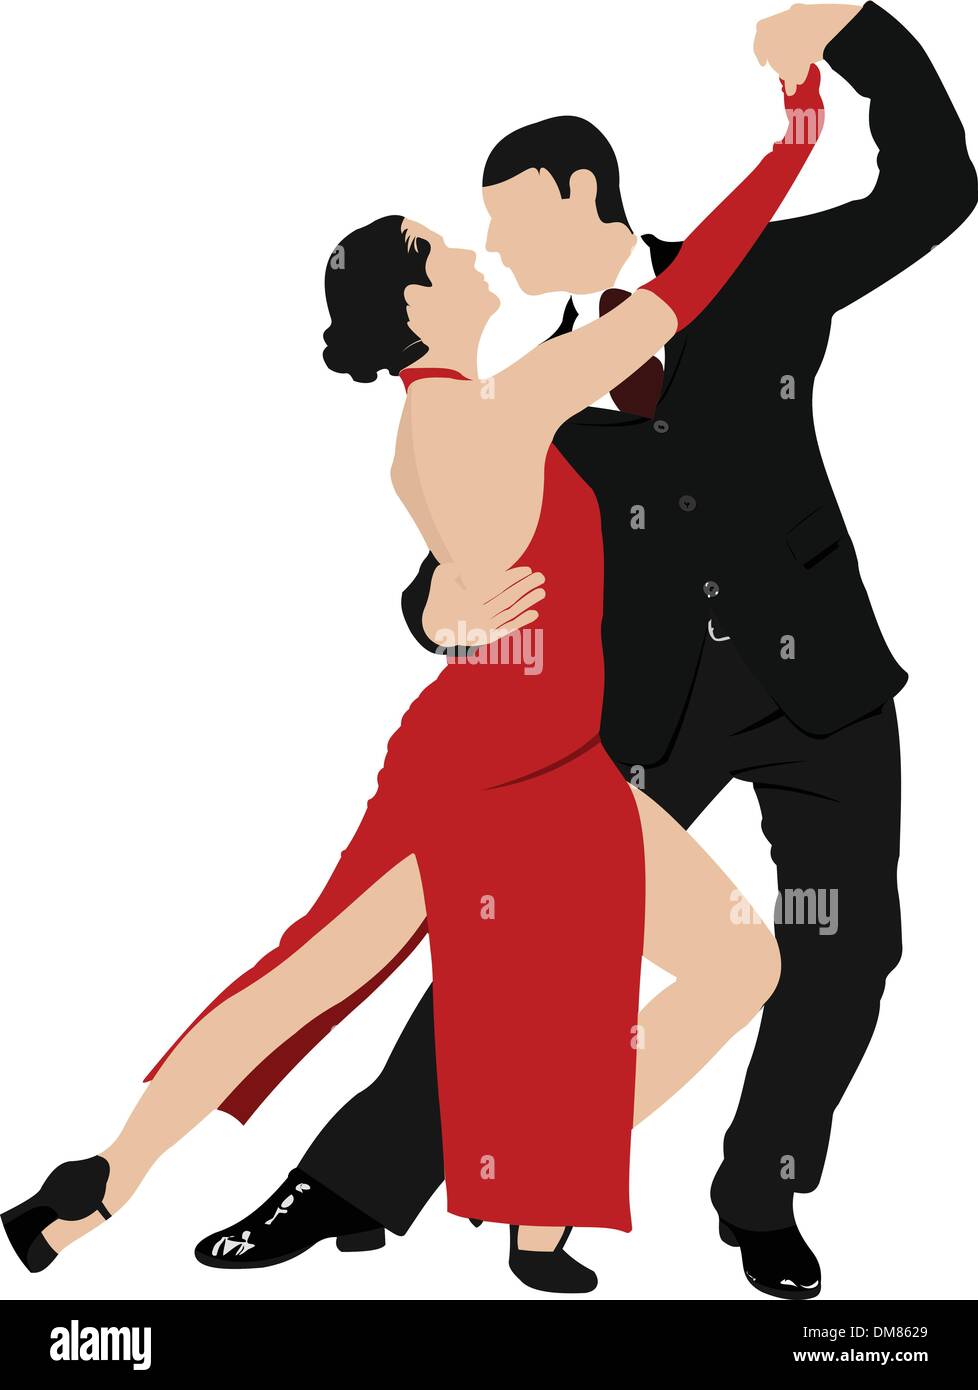 Paare, die einen Tango tanzen. Vektor-illustration Stock-Vektorgrafik -  Alamy